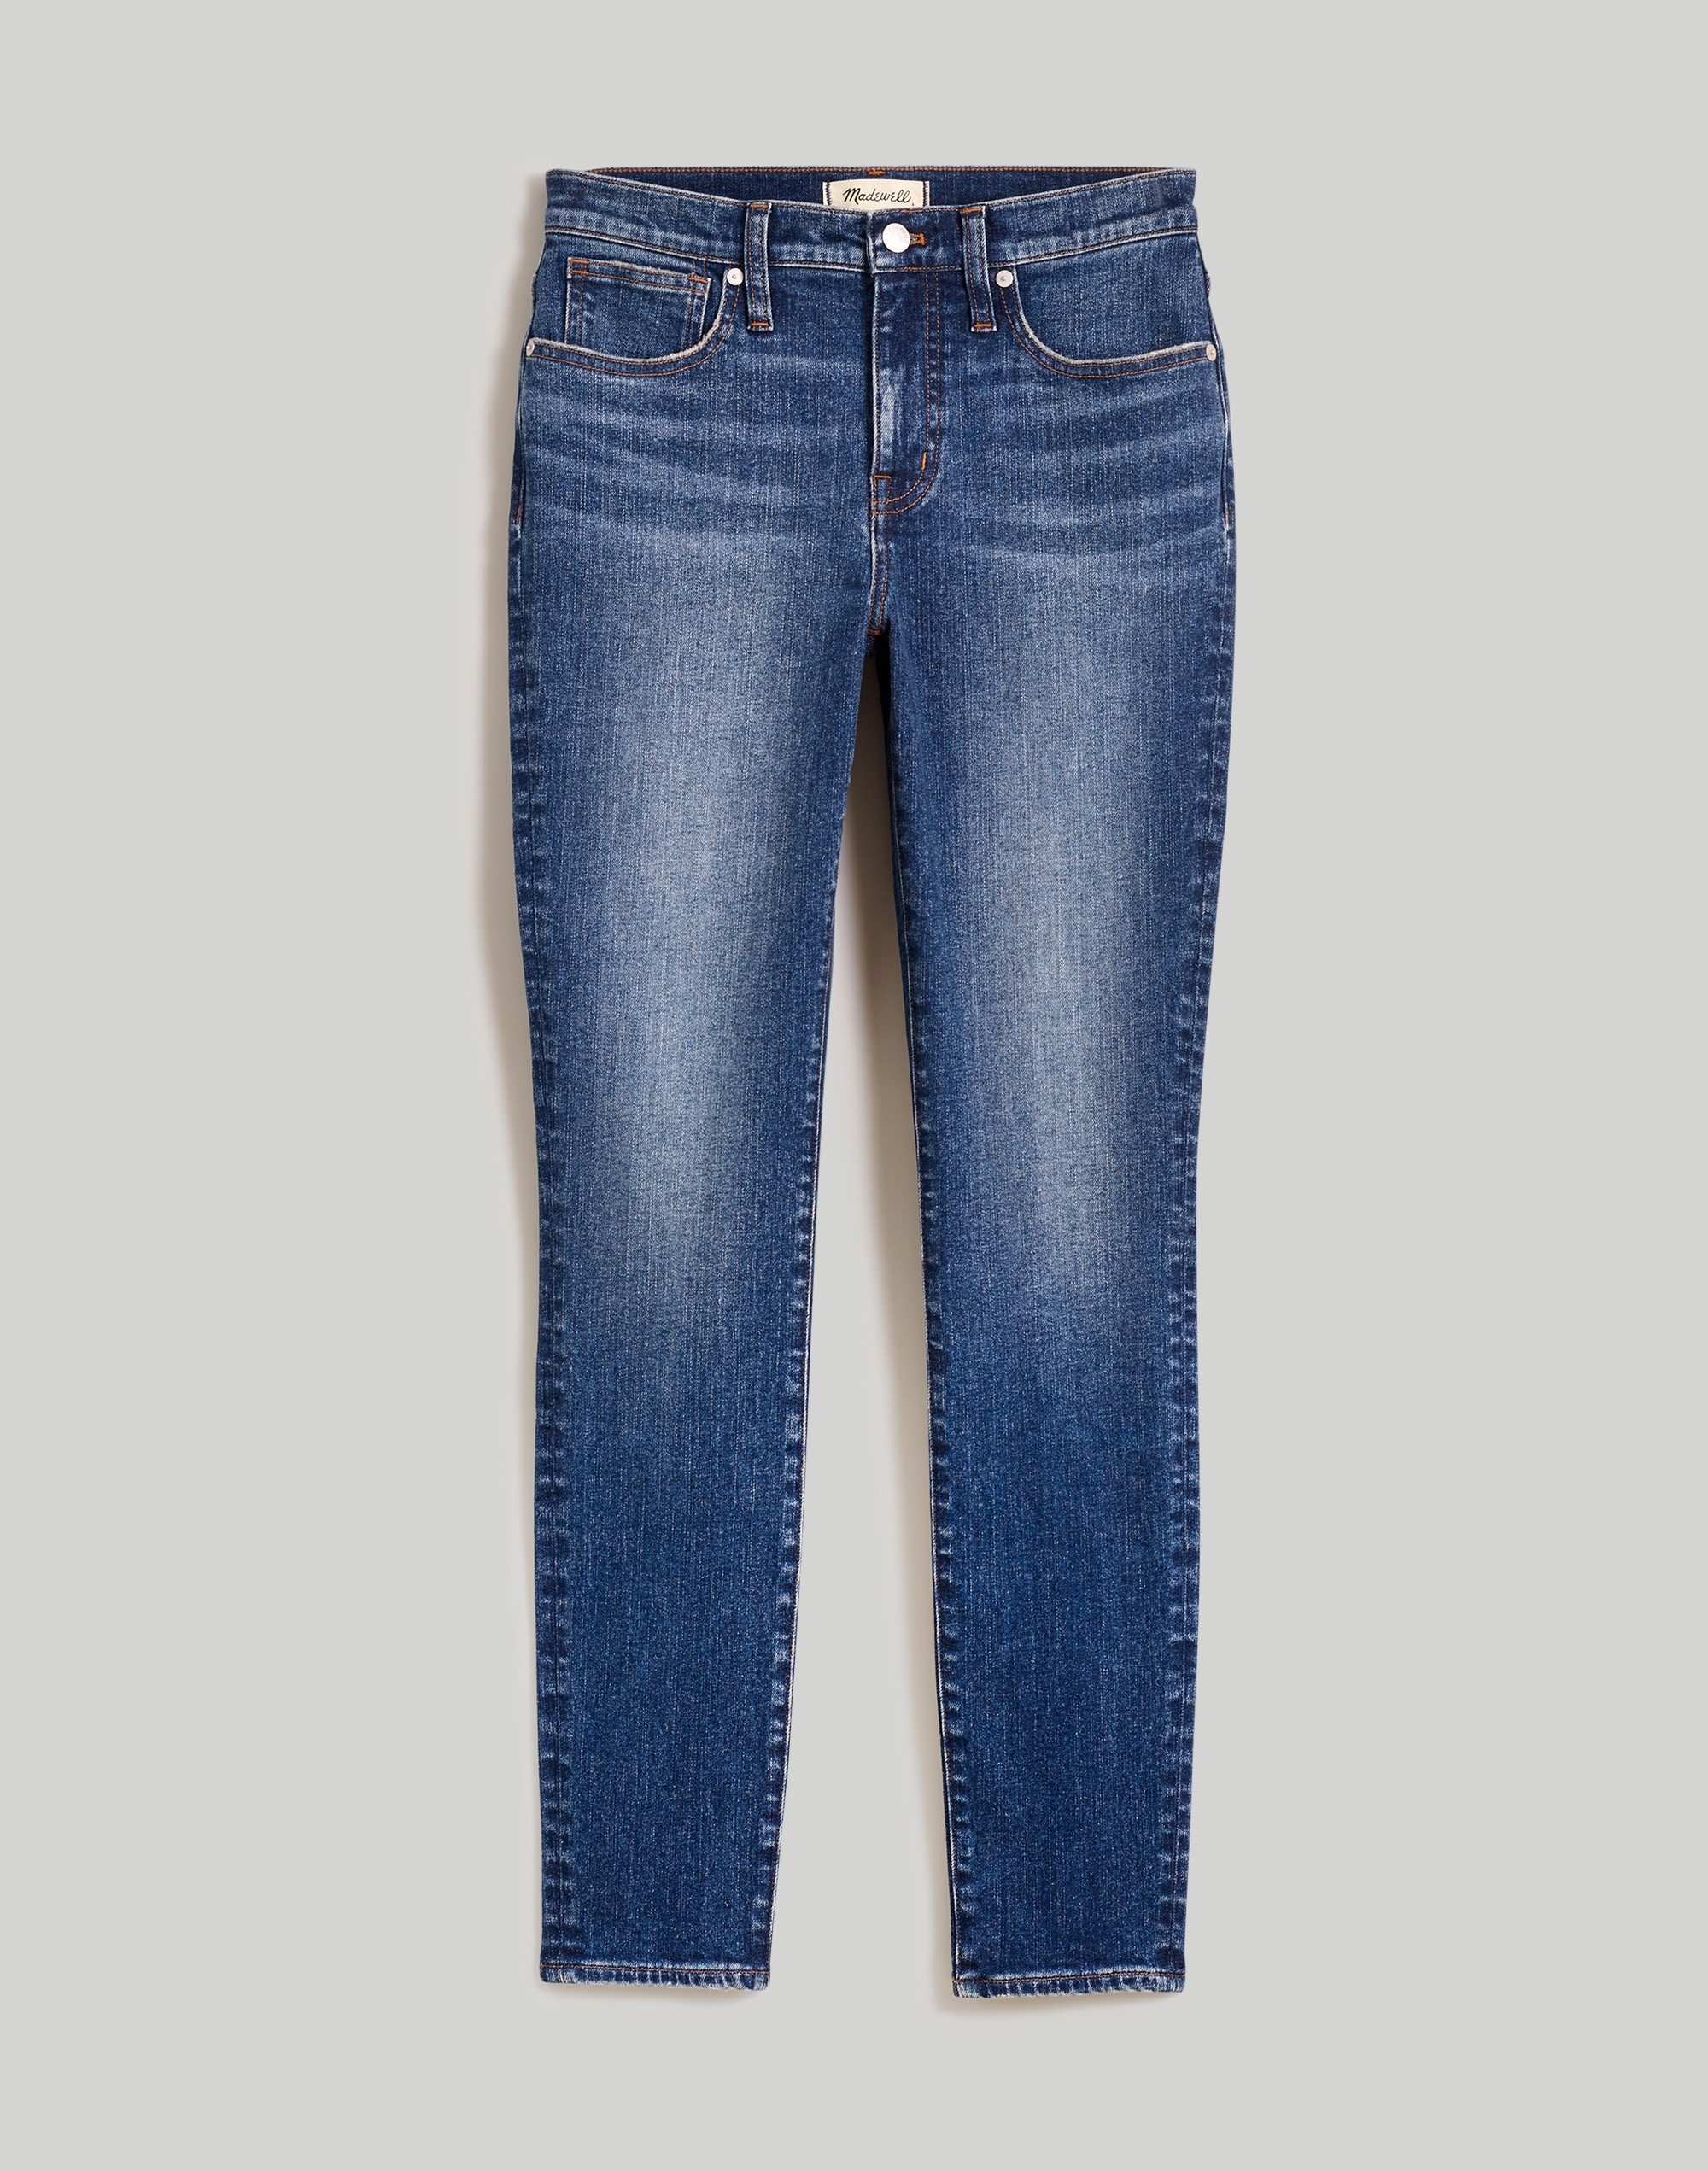 9" Mid-Rise Skinny Jeans Ravine Wash